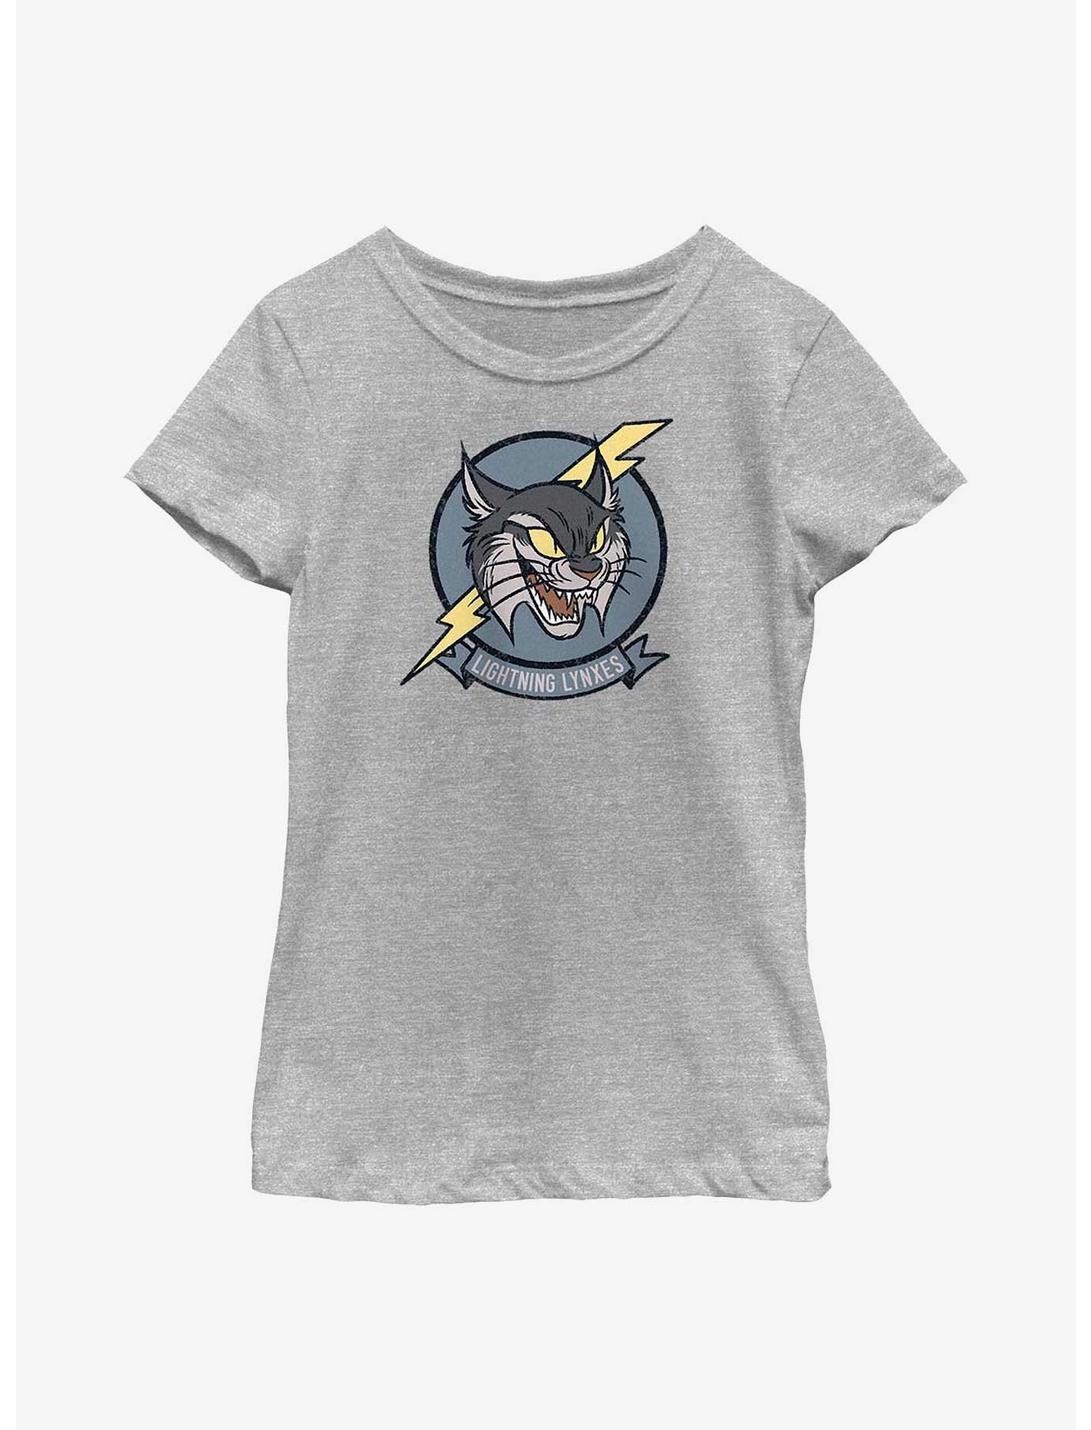 Disney Strange World Lightning Lynxes Youth Girls T-Shirt, ATH HTR, hi-res